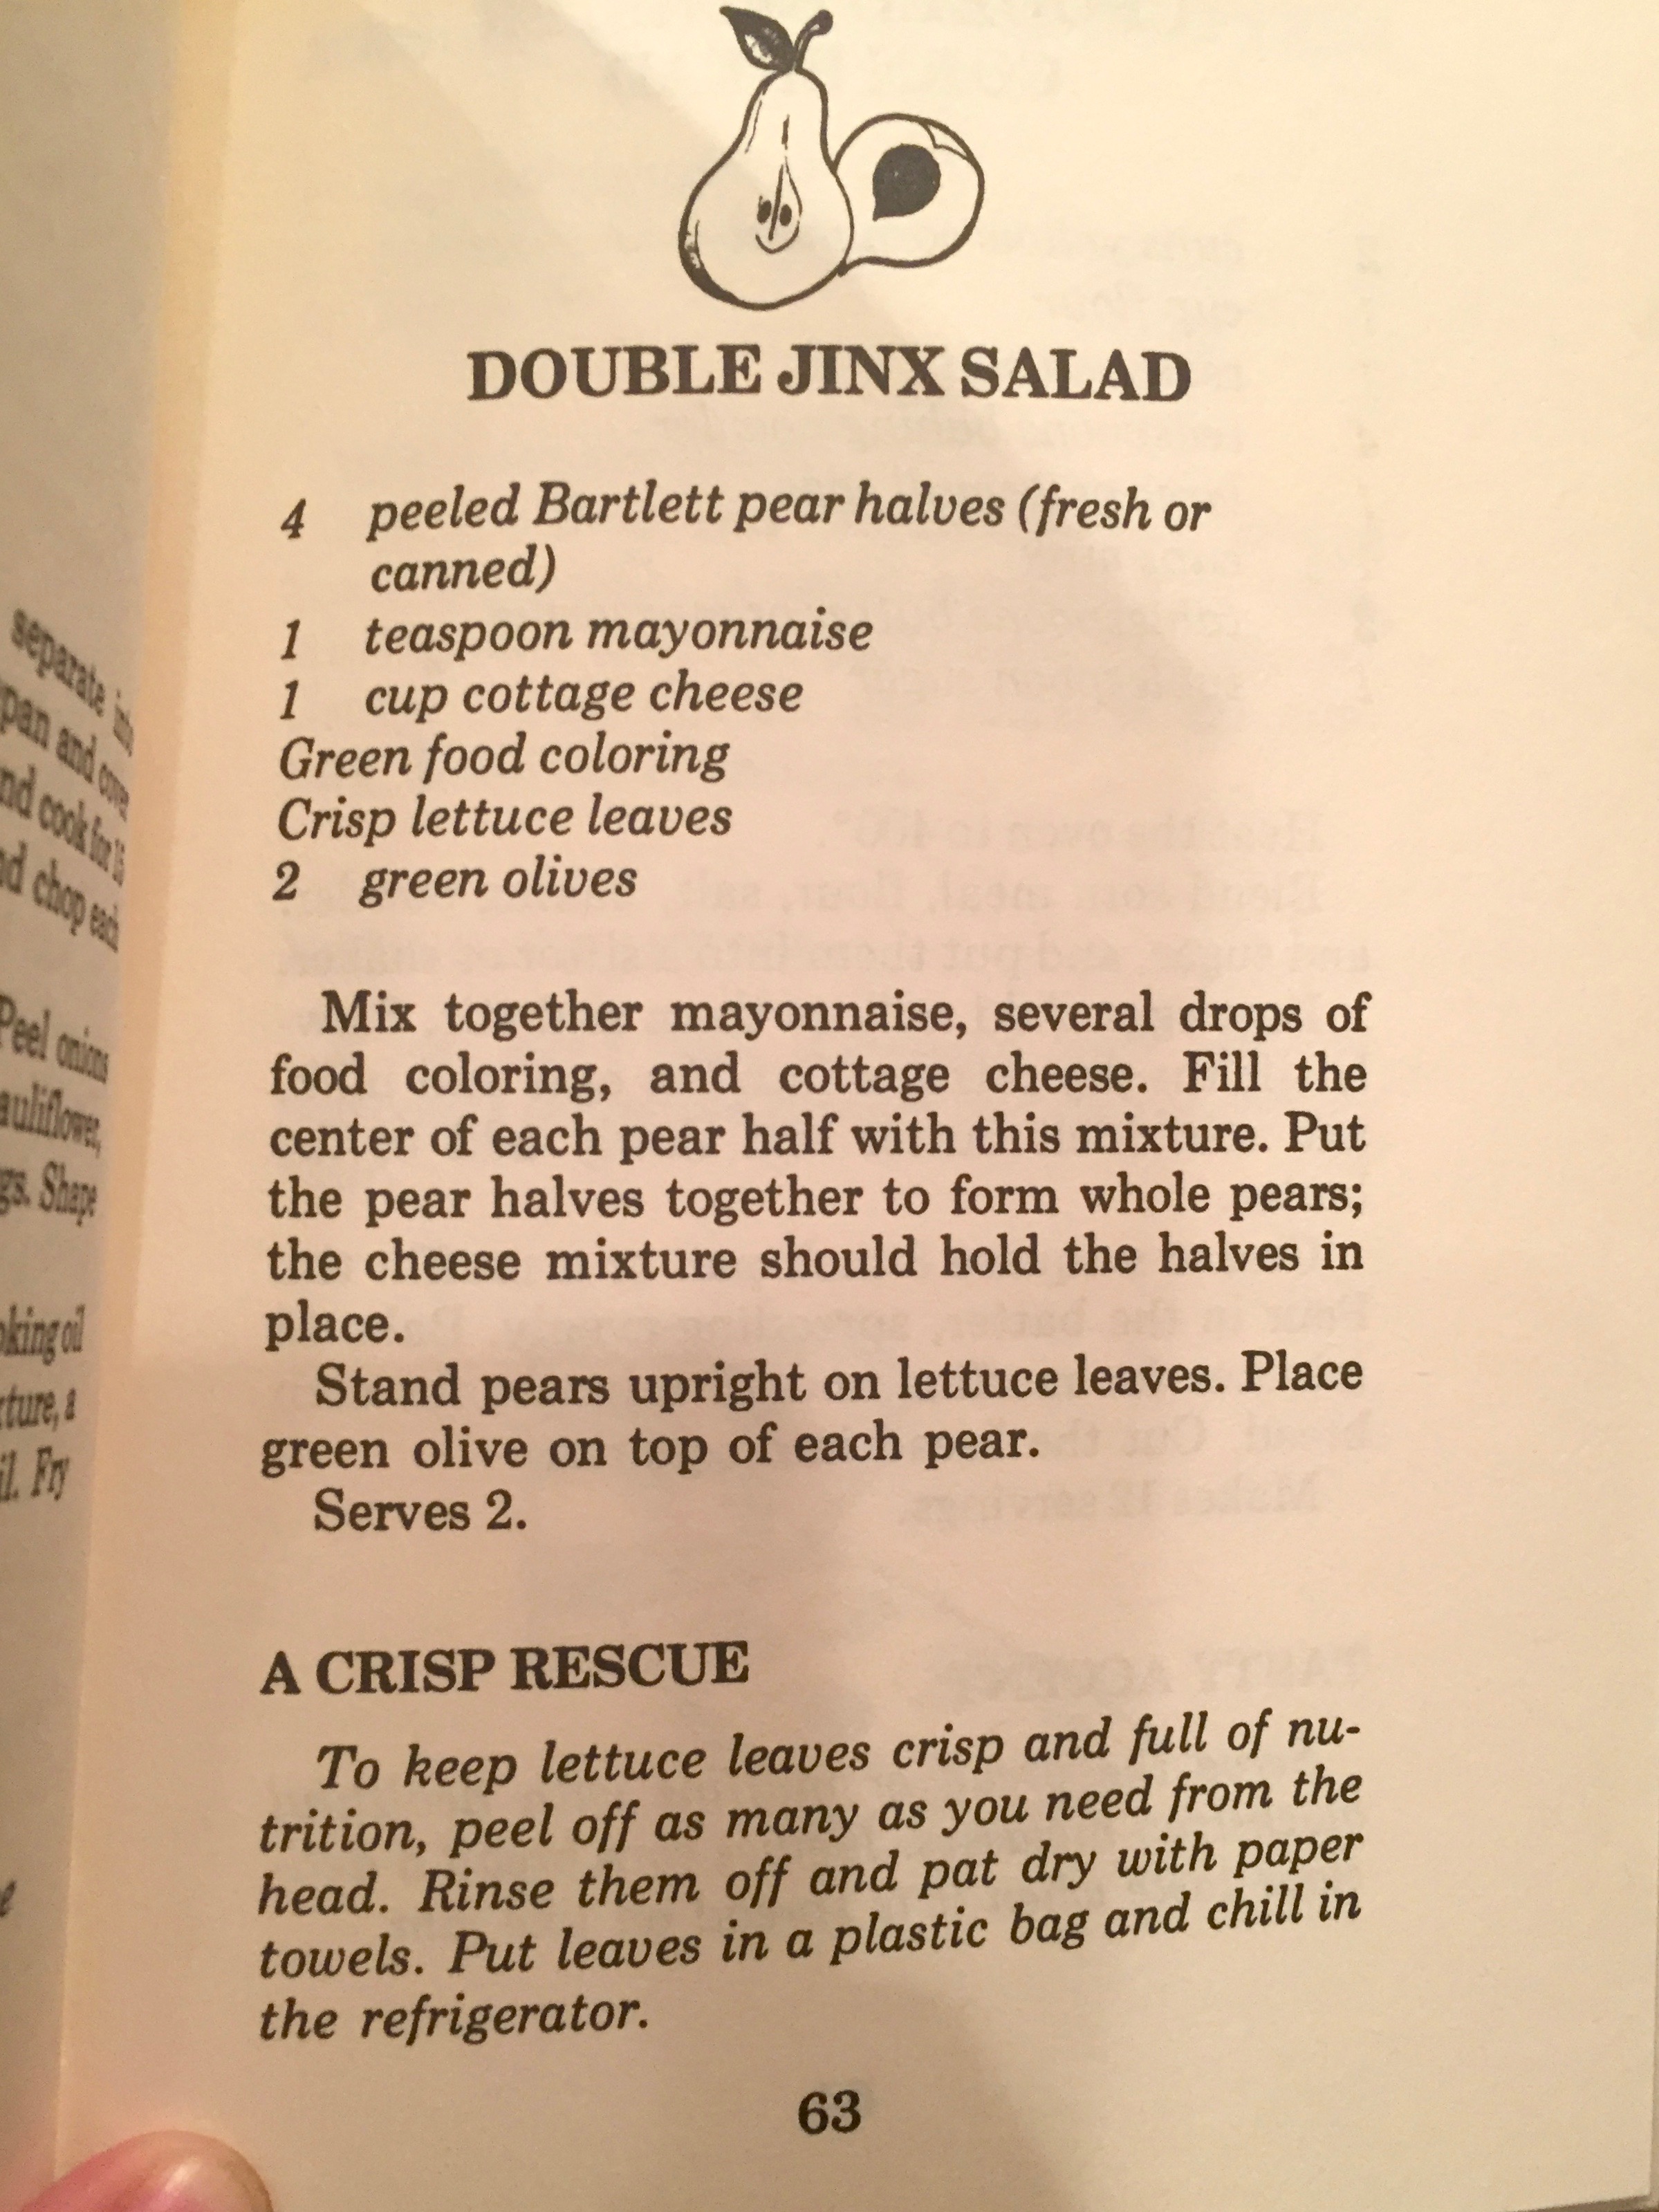 Horrifying salad from The Nancy Drew Cookbook